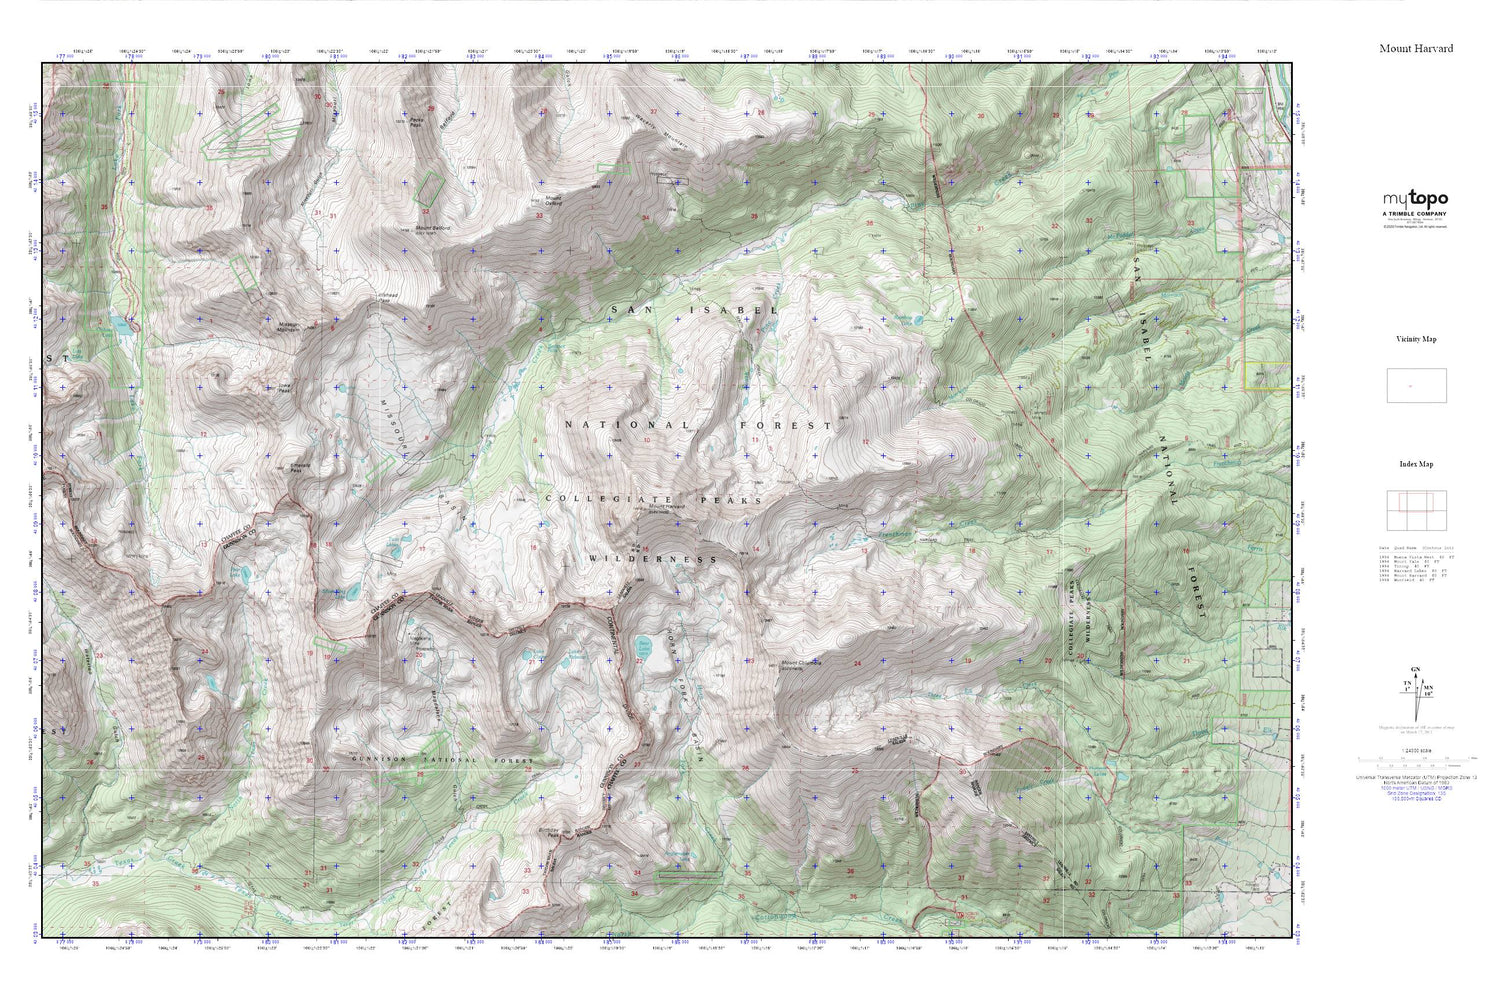 Mount Harvard MyTopo Explorer Series Map Image